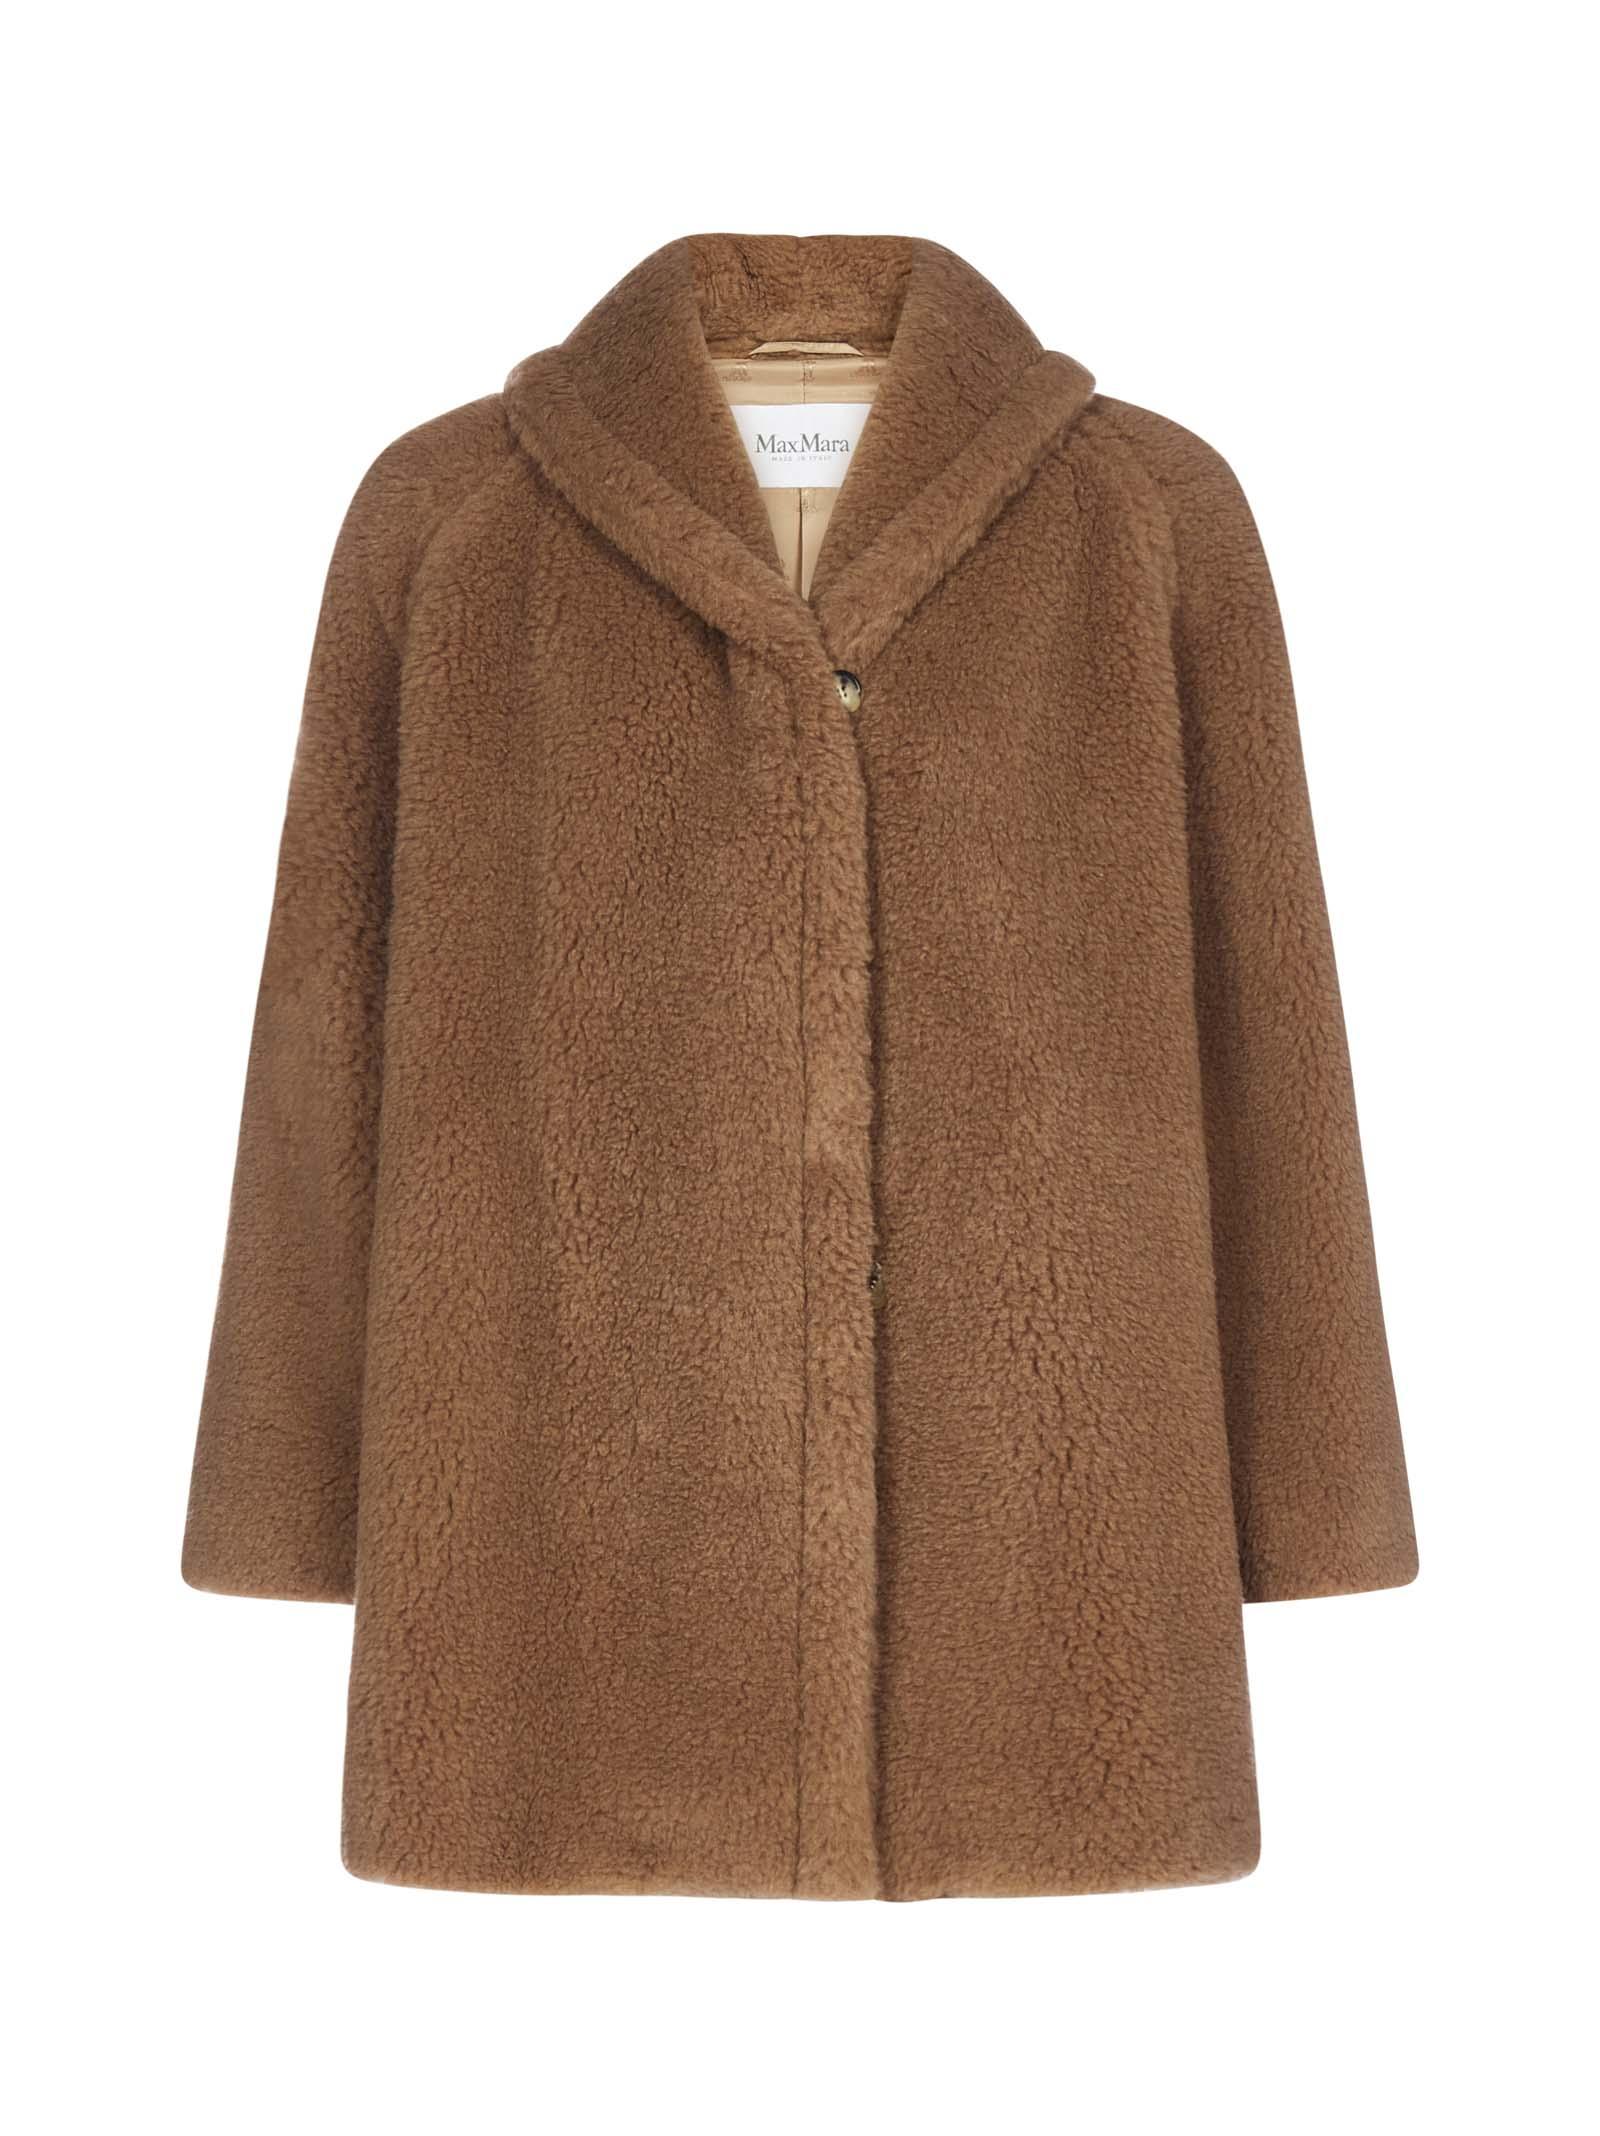 Max Mara Synthetic Teddy Coat in Brown - Lyst